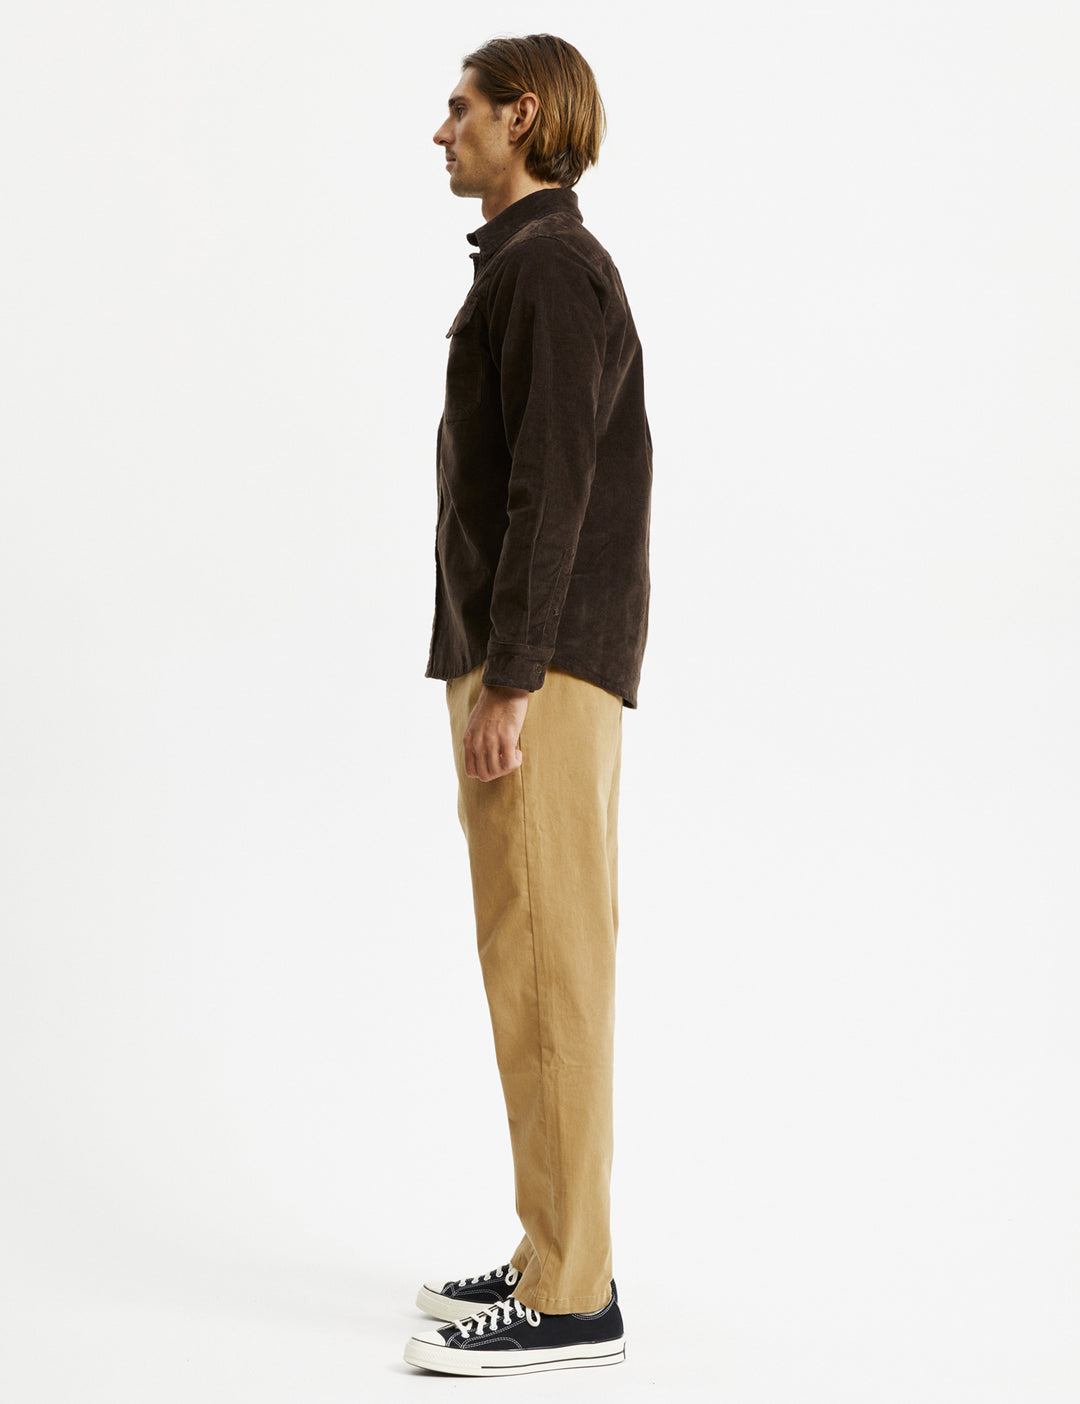 Mr Simple - Corduroy Long Sleeve Shirt in Dark Chocolate | Buster McGee